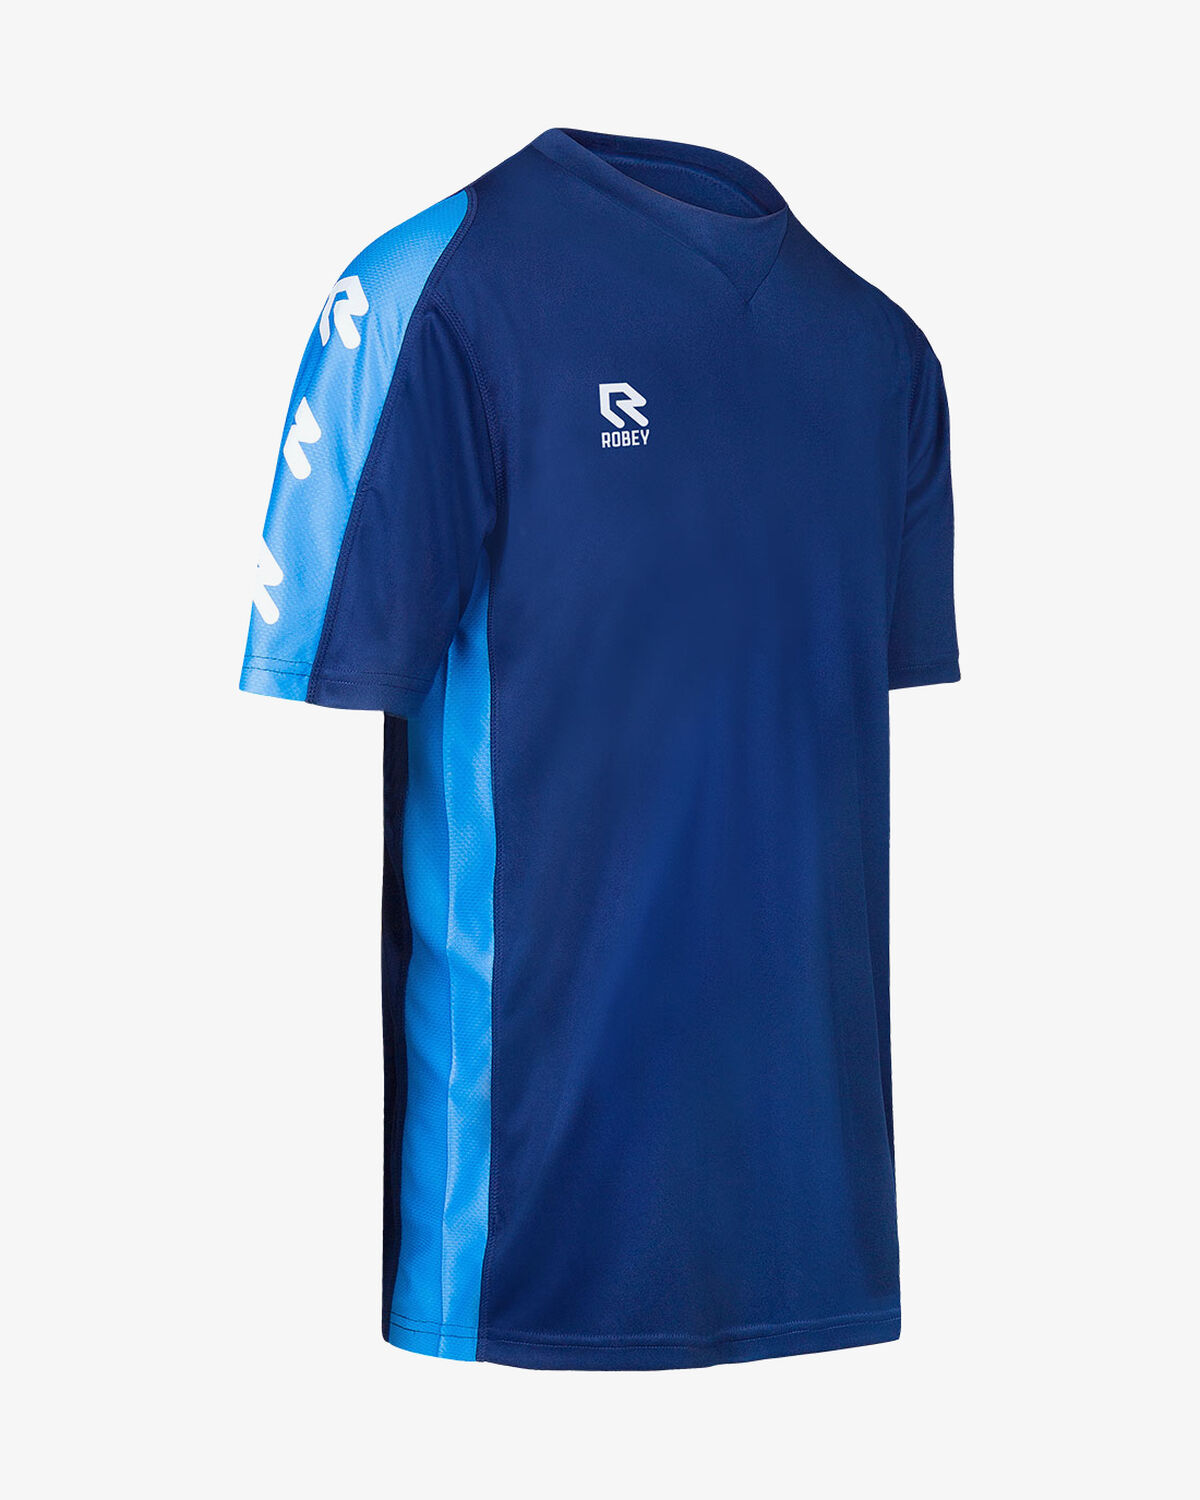 Performance Shirt, Navy/Sky Blue, hi-res